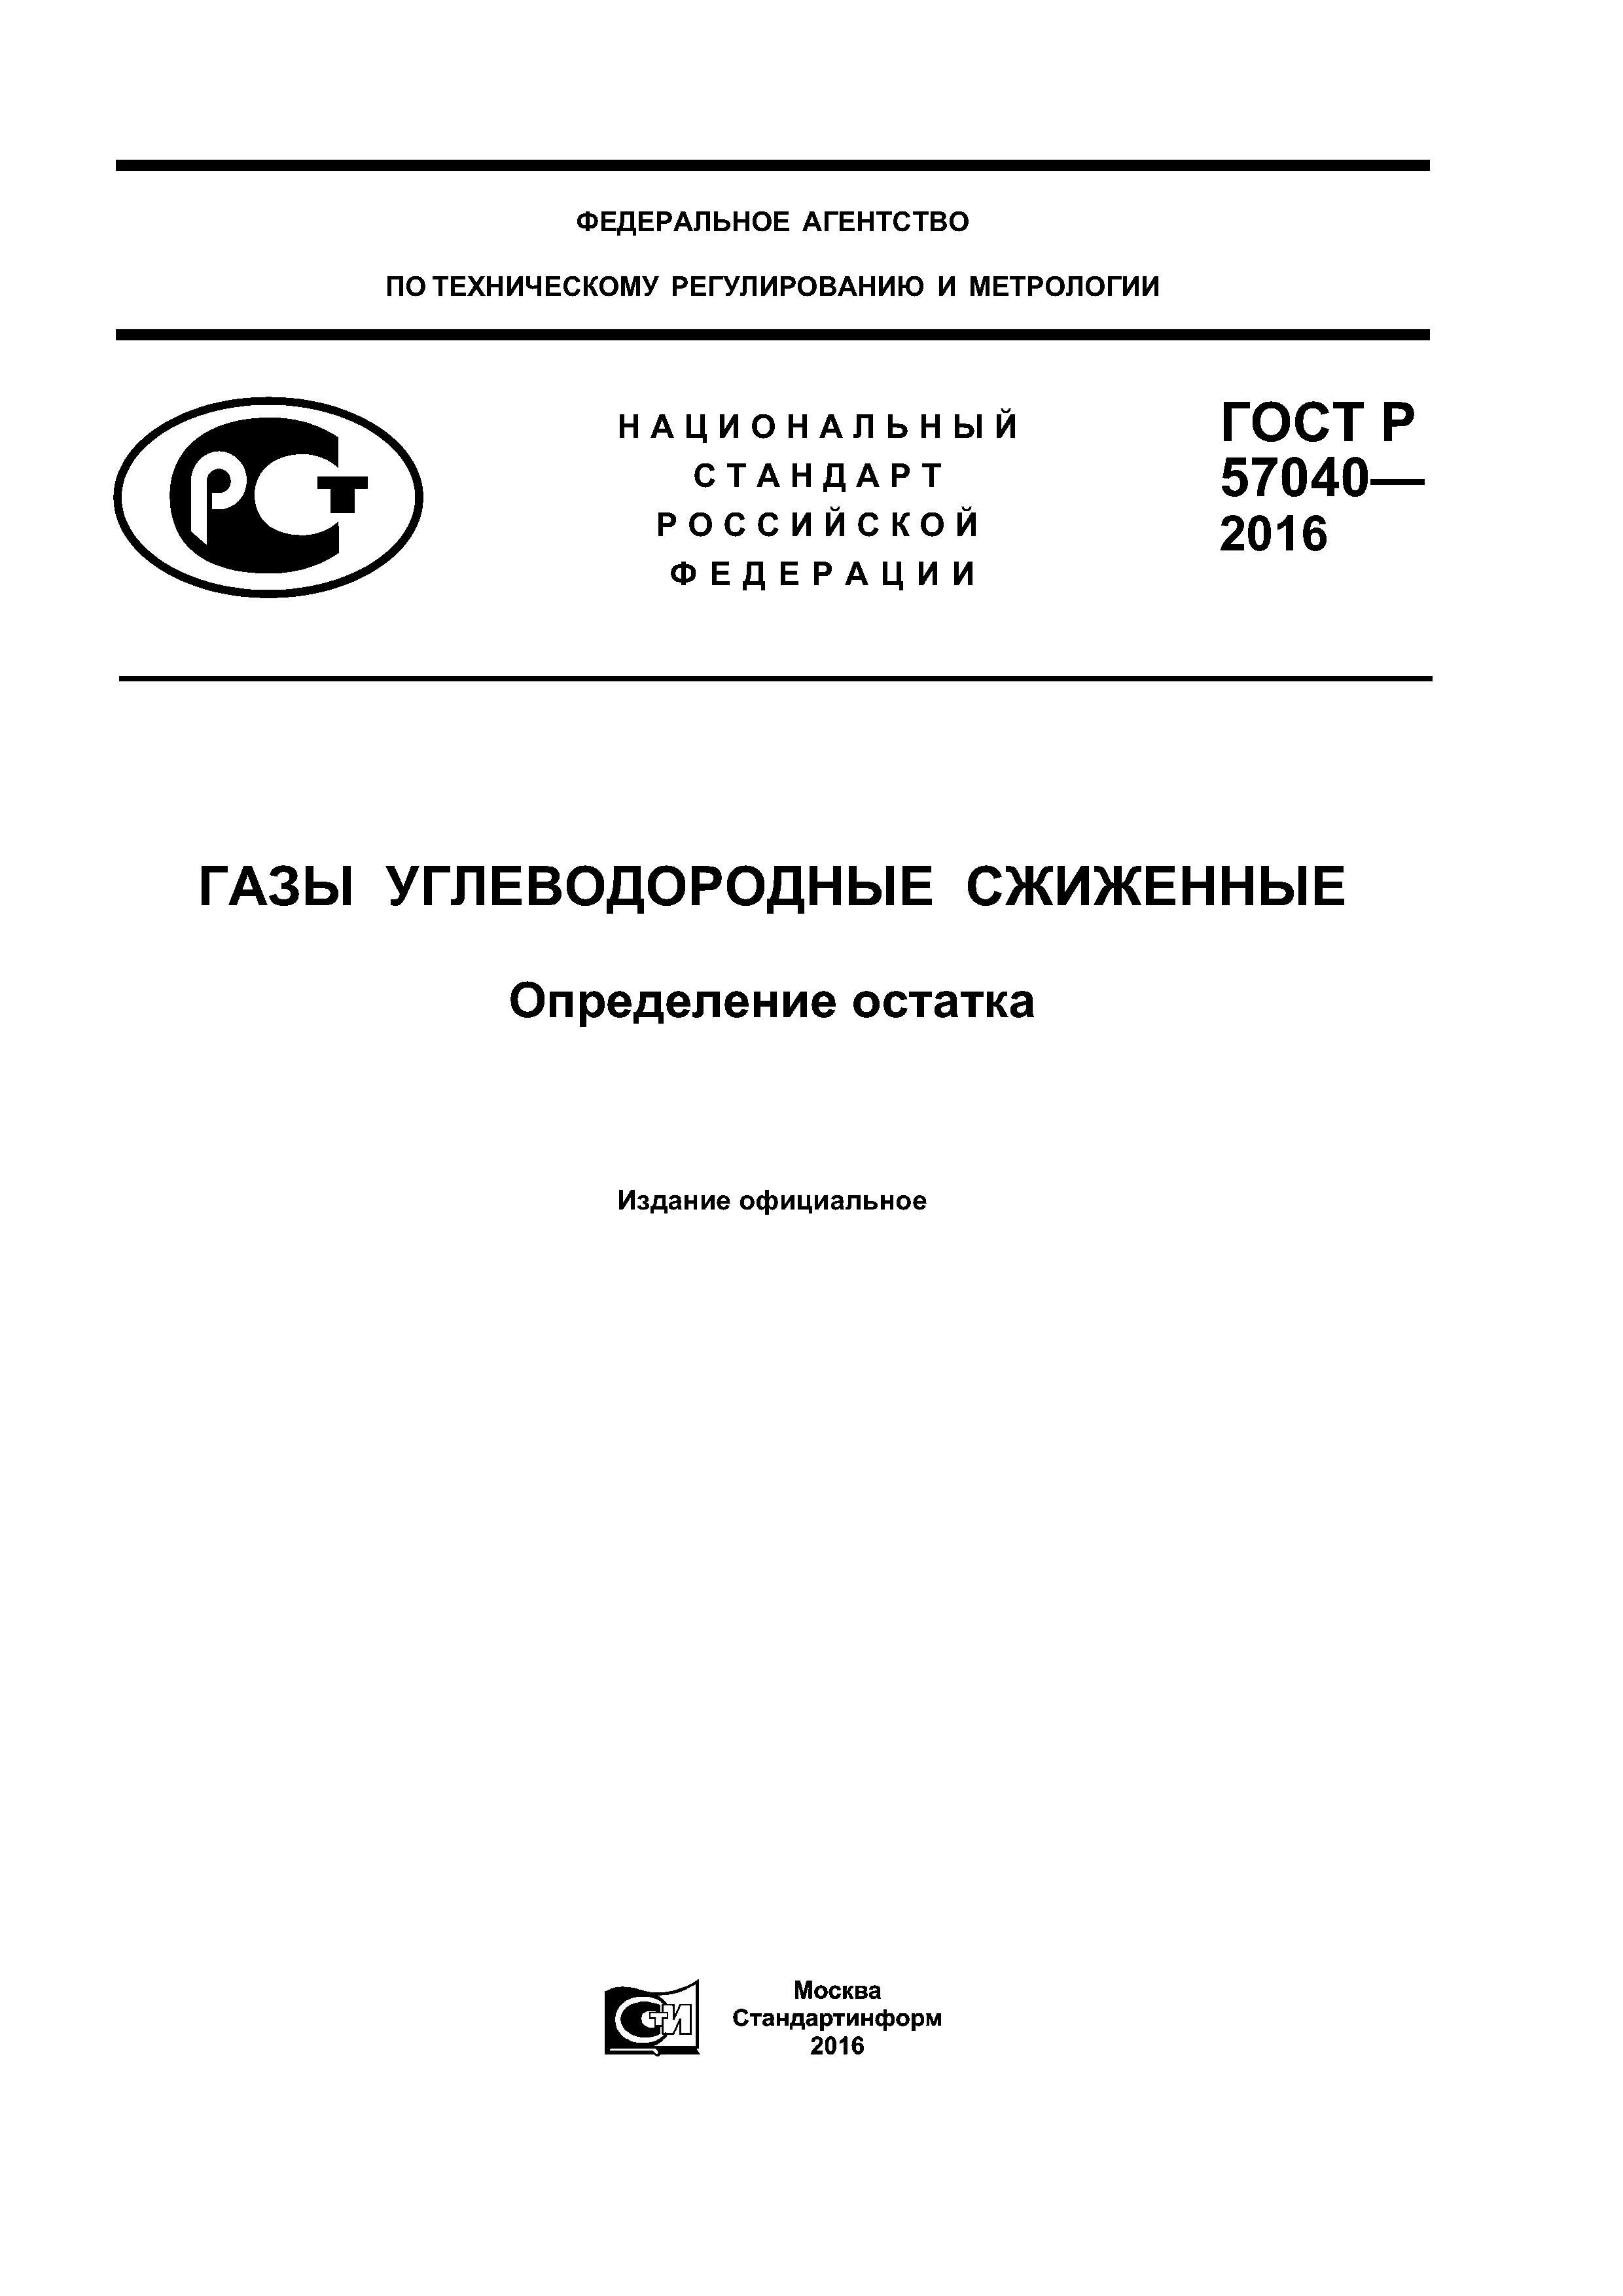 ГОСТ Р 57040-2016